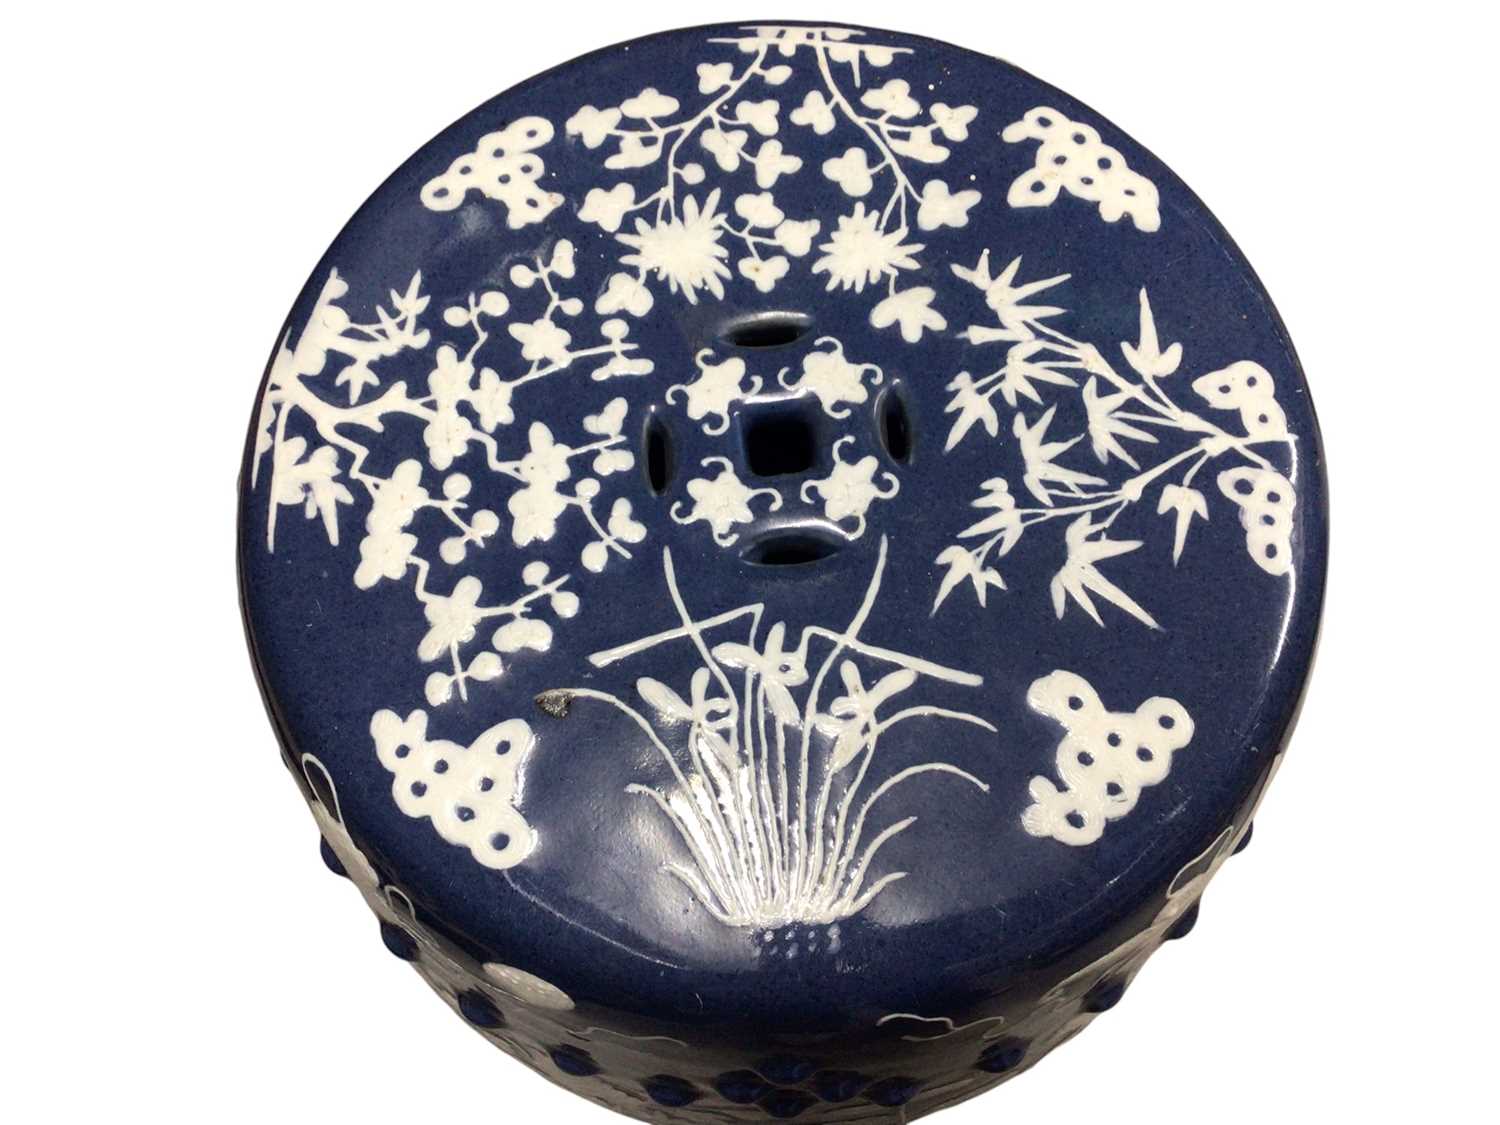 Chinese ceramic garden seat - Image 3 of 3